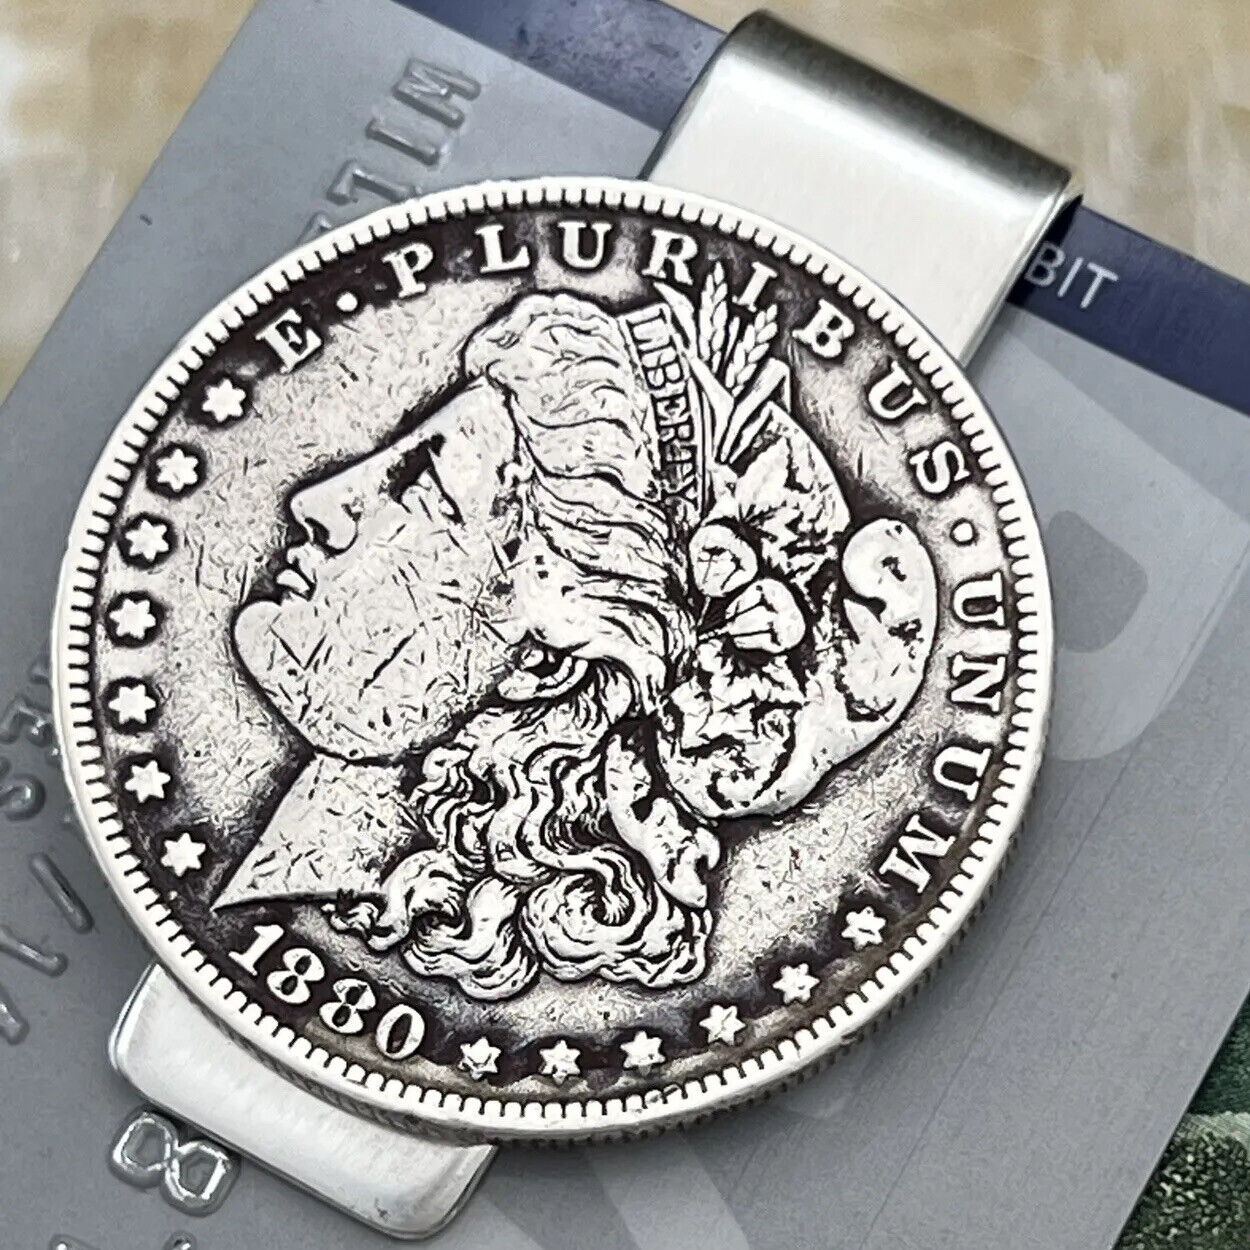 New Sterling Silver .925 Credit Card Money Clip Wallet 90% Silver Morgan Dollar